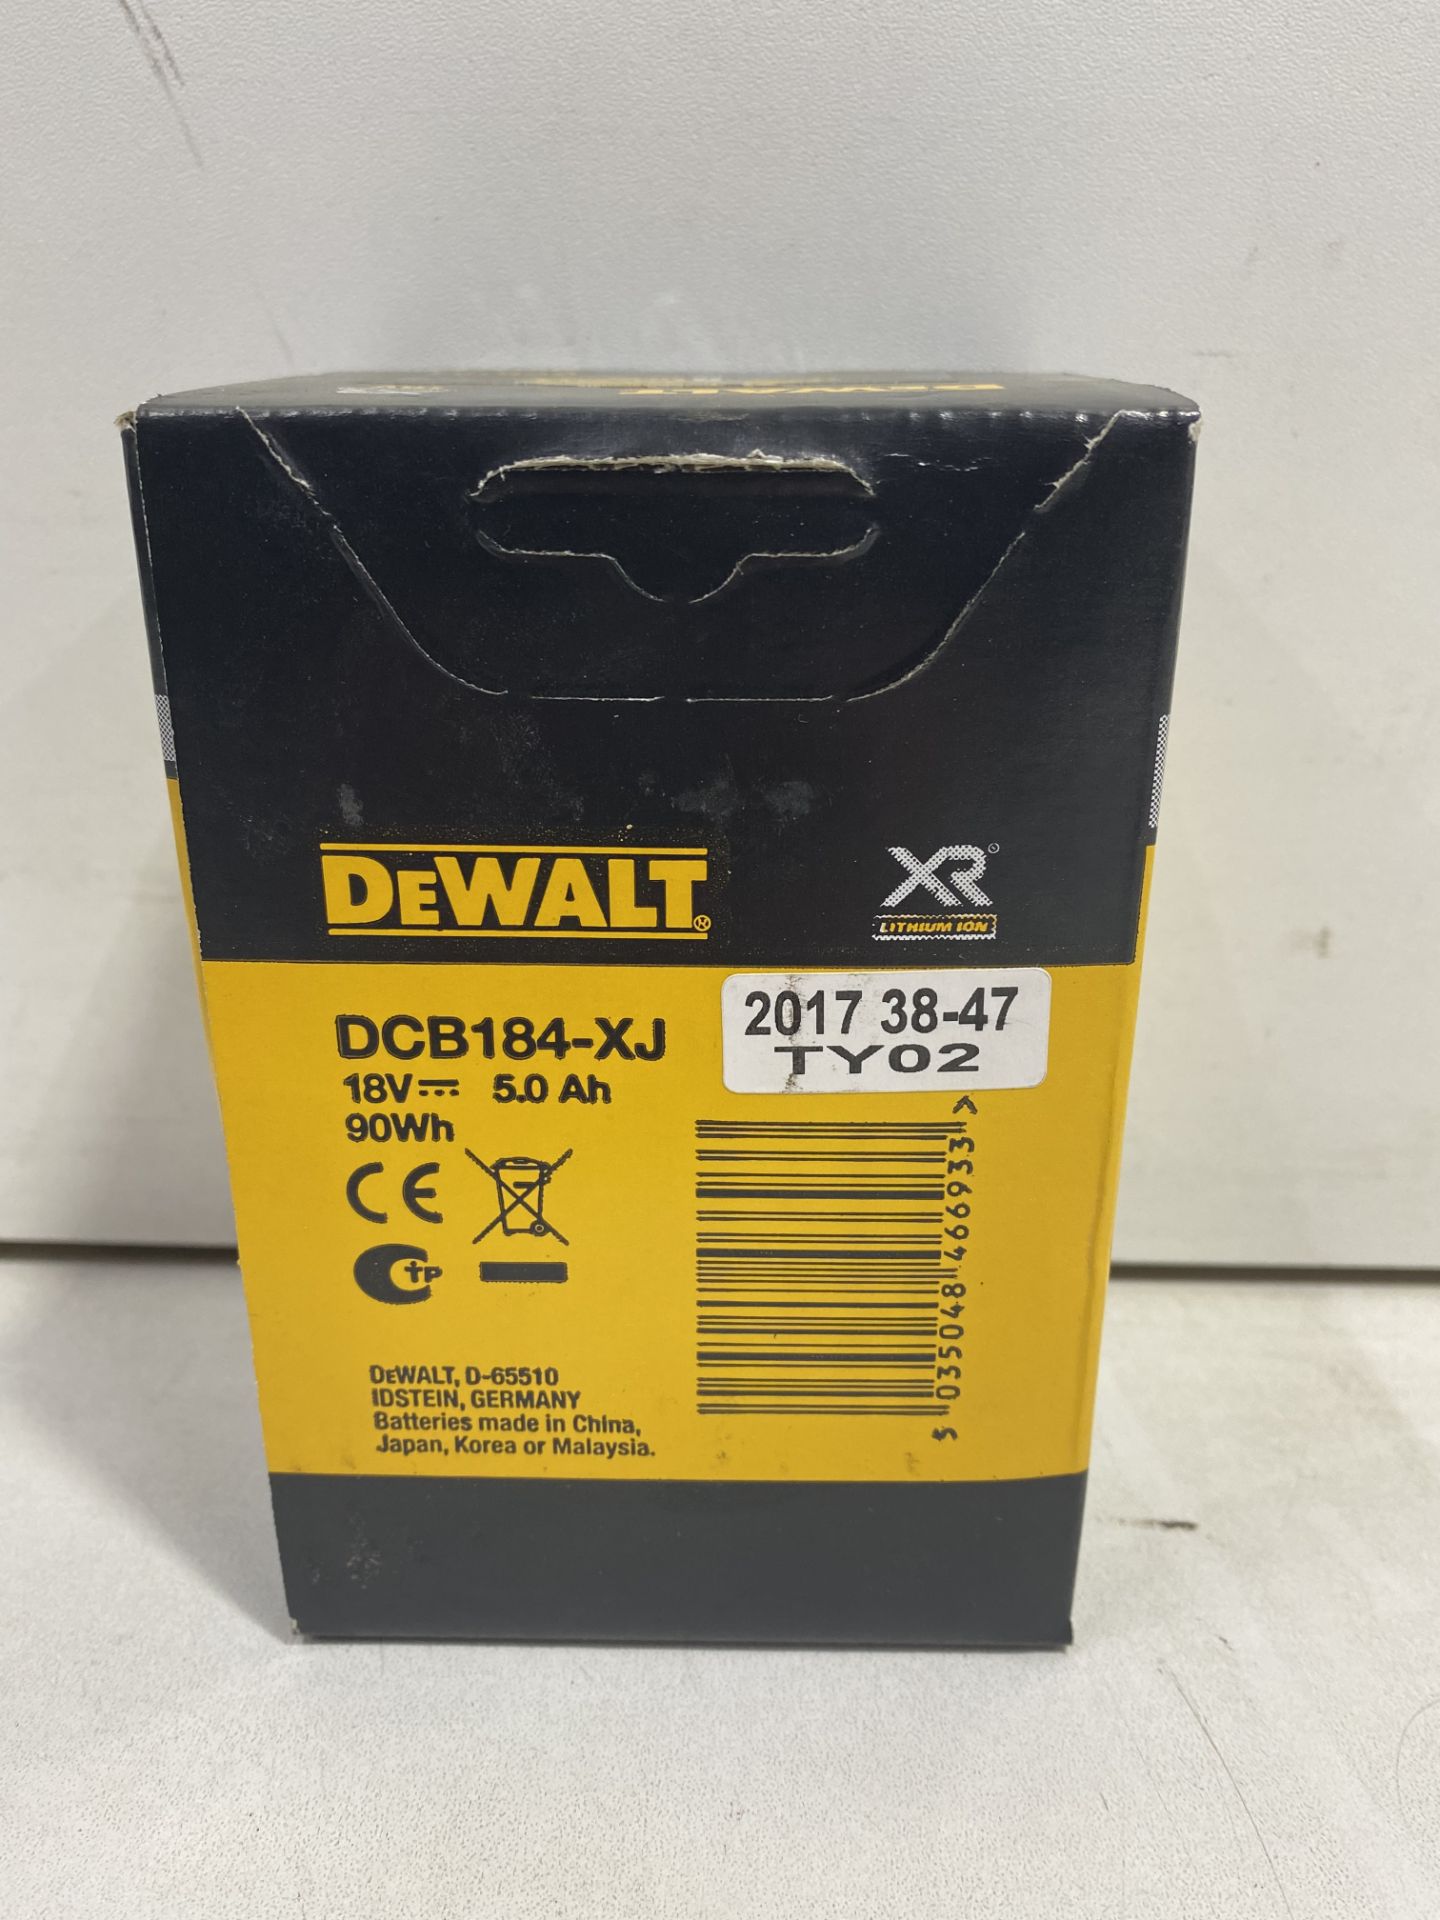 3 x DeWalt Genuine DCB184 18V XR 5.0Ah Lithium-Ion Battery - Image 3 of 3